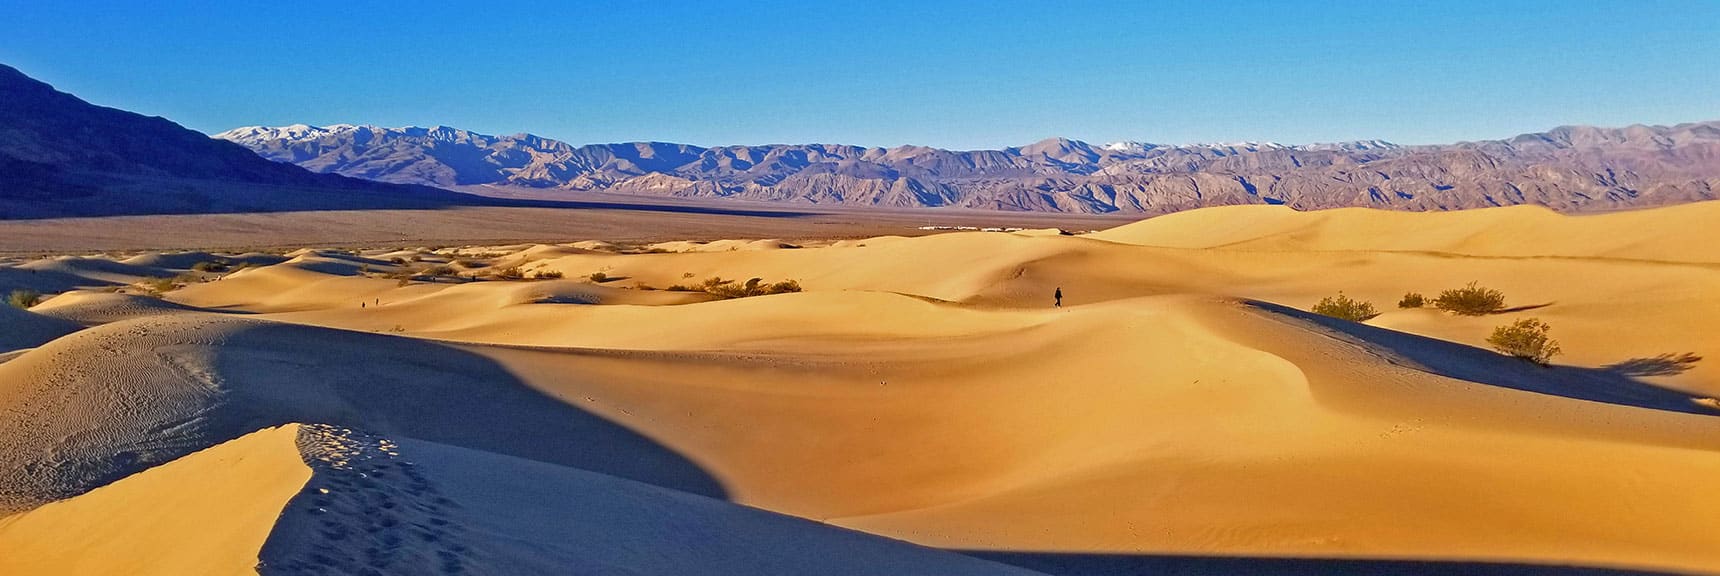 View West | Mesquite Sand Dunes Sunrise | Death Valley National Park, California